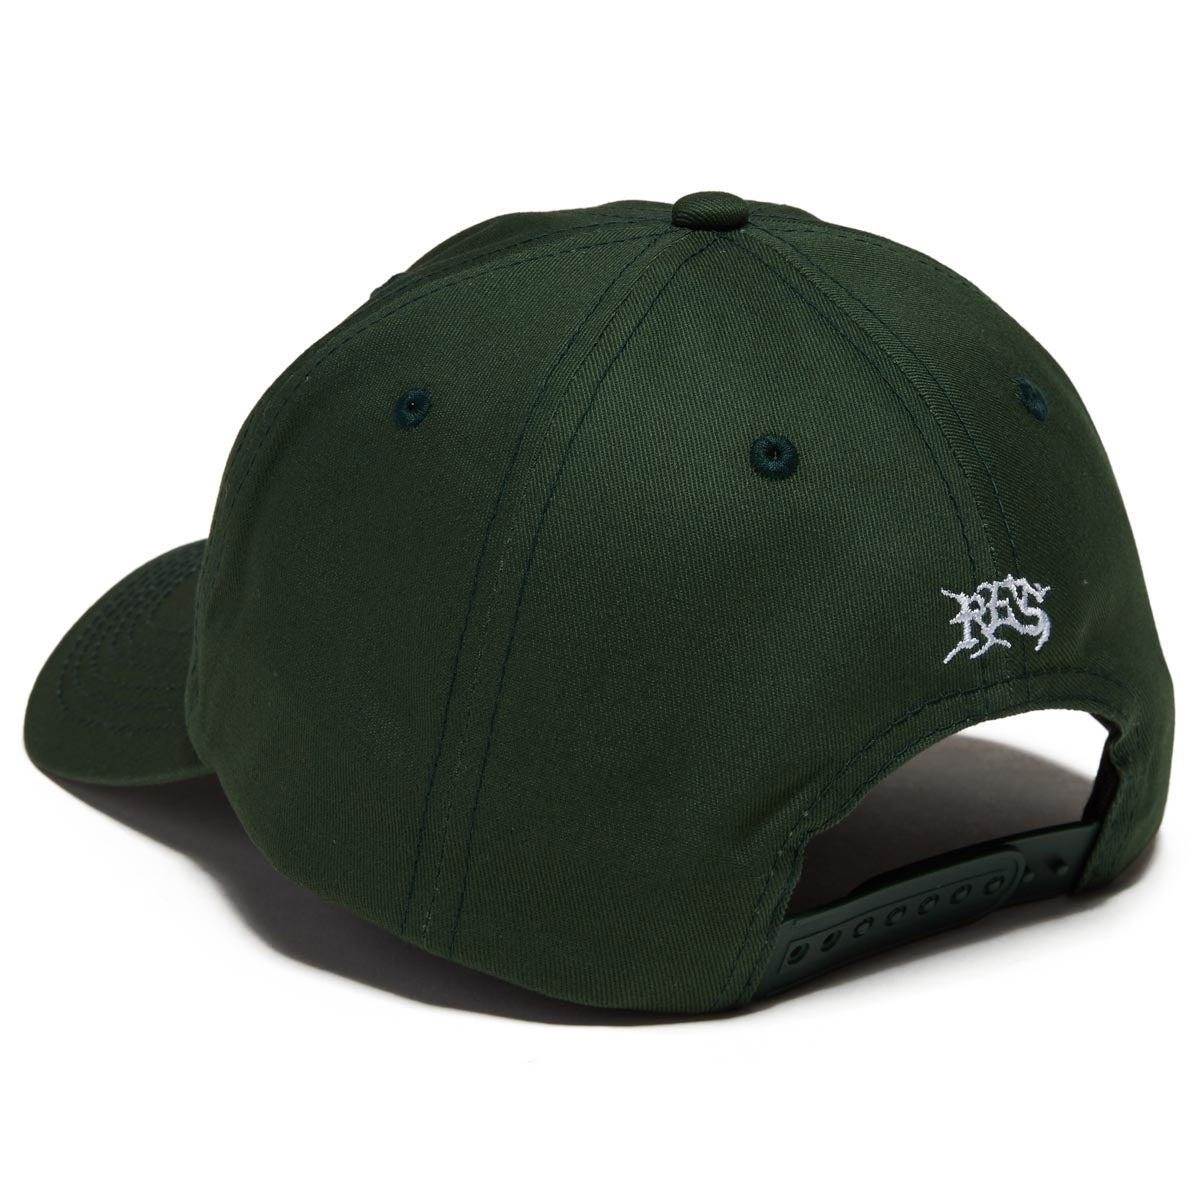 LO-RES Leisure Hat - Dark Green image 2